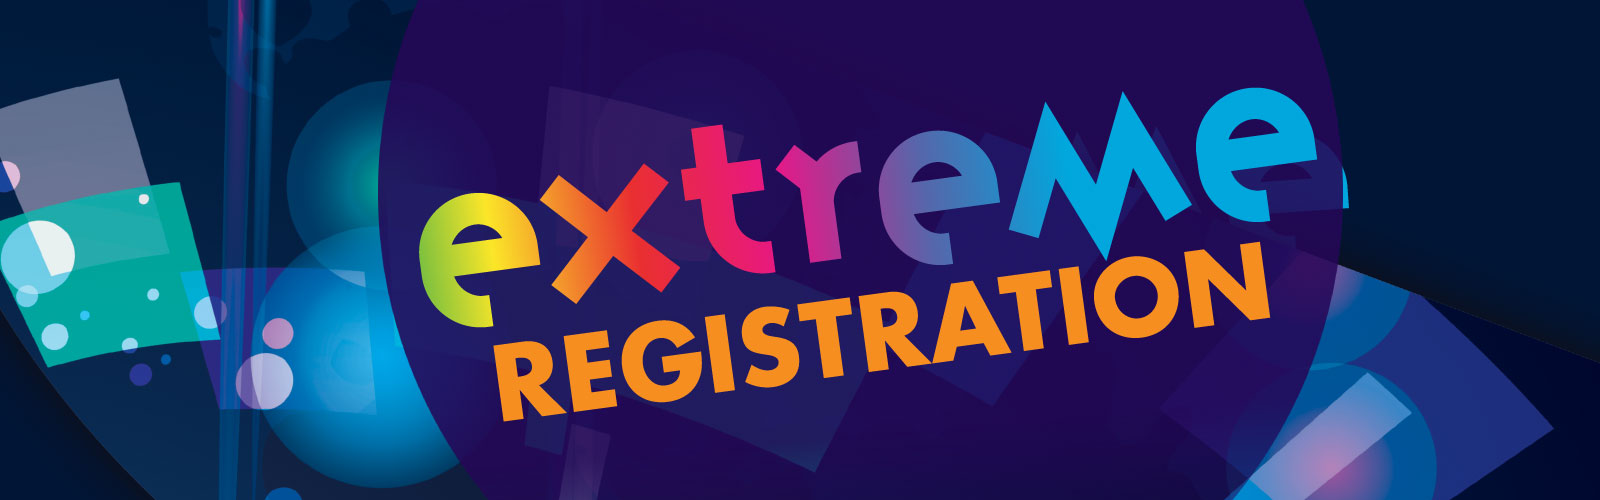  Extreme registration 